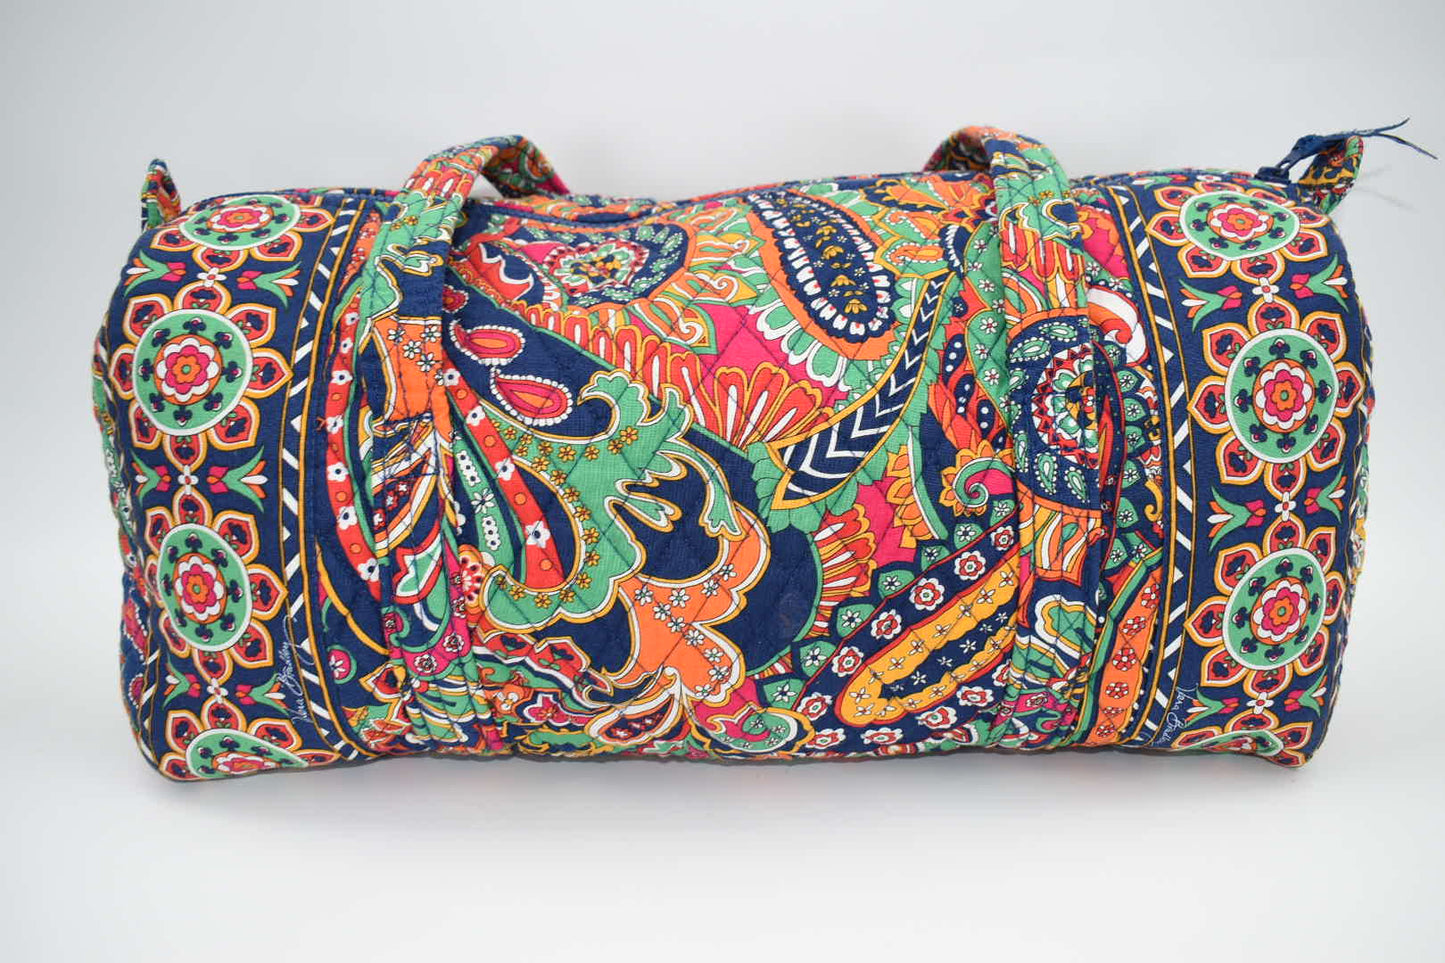 Vera Bradley Small Duffel Bag in Venetian Paisley Pattern